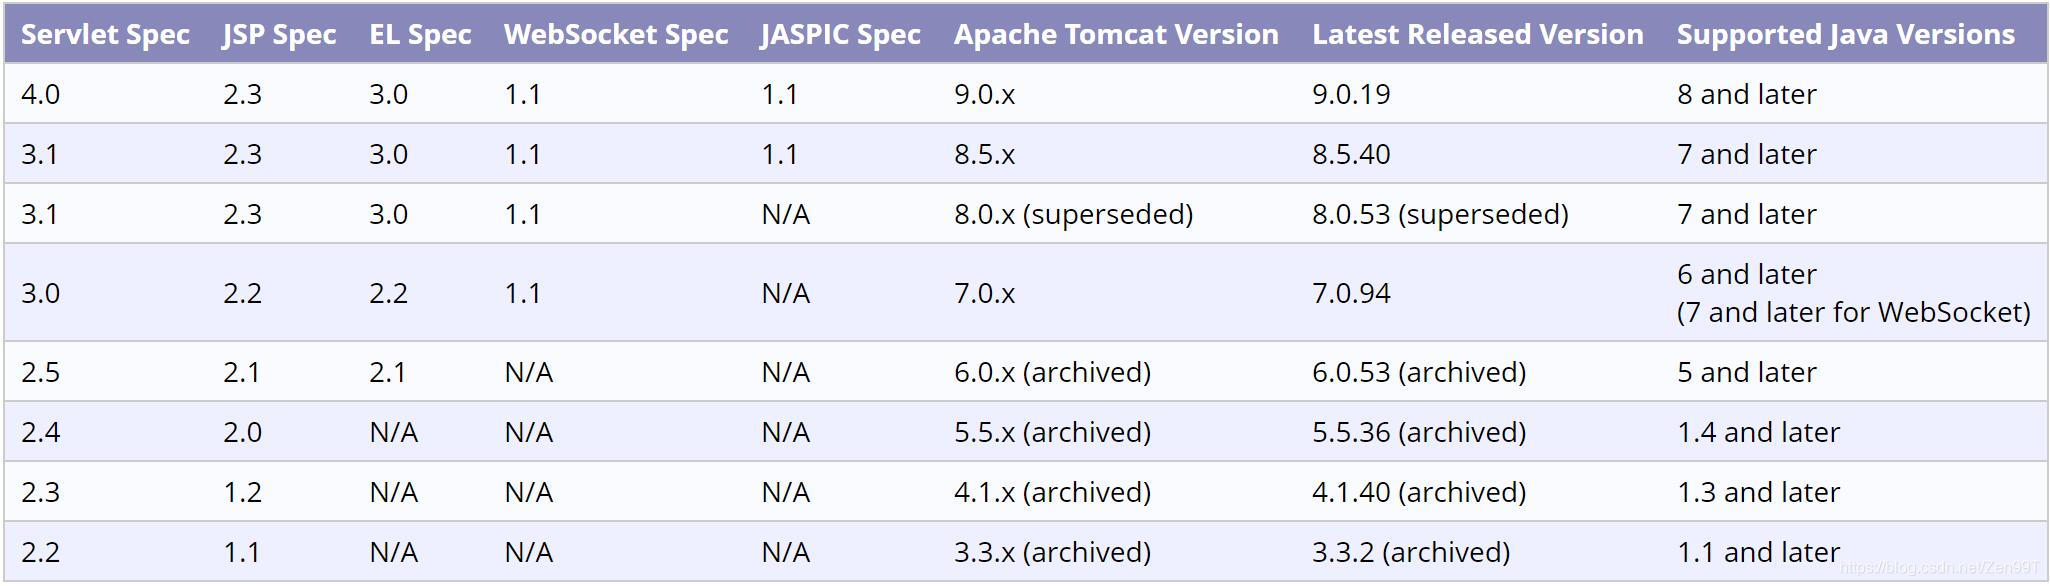 Apache Tomcat Versions